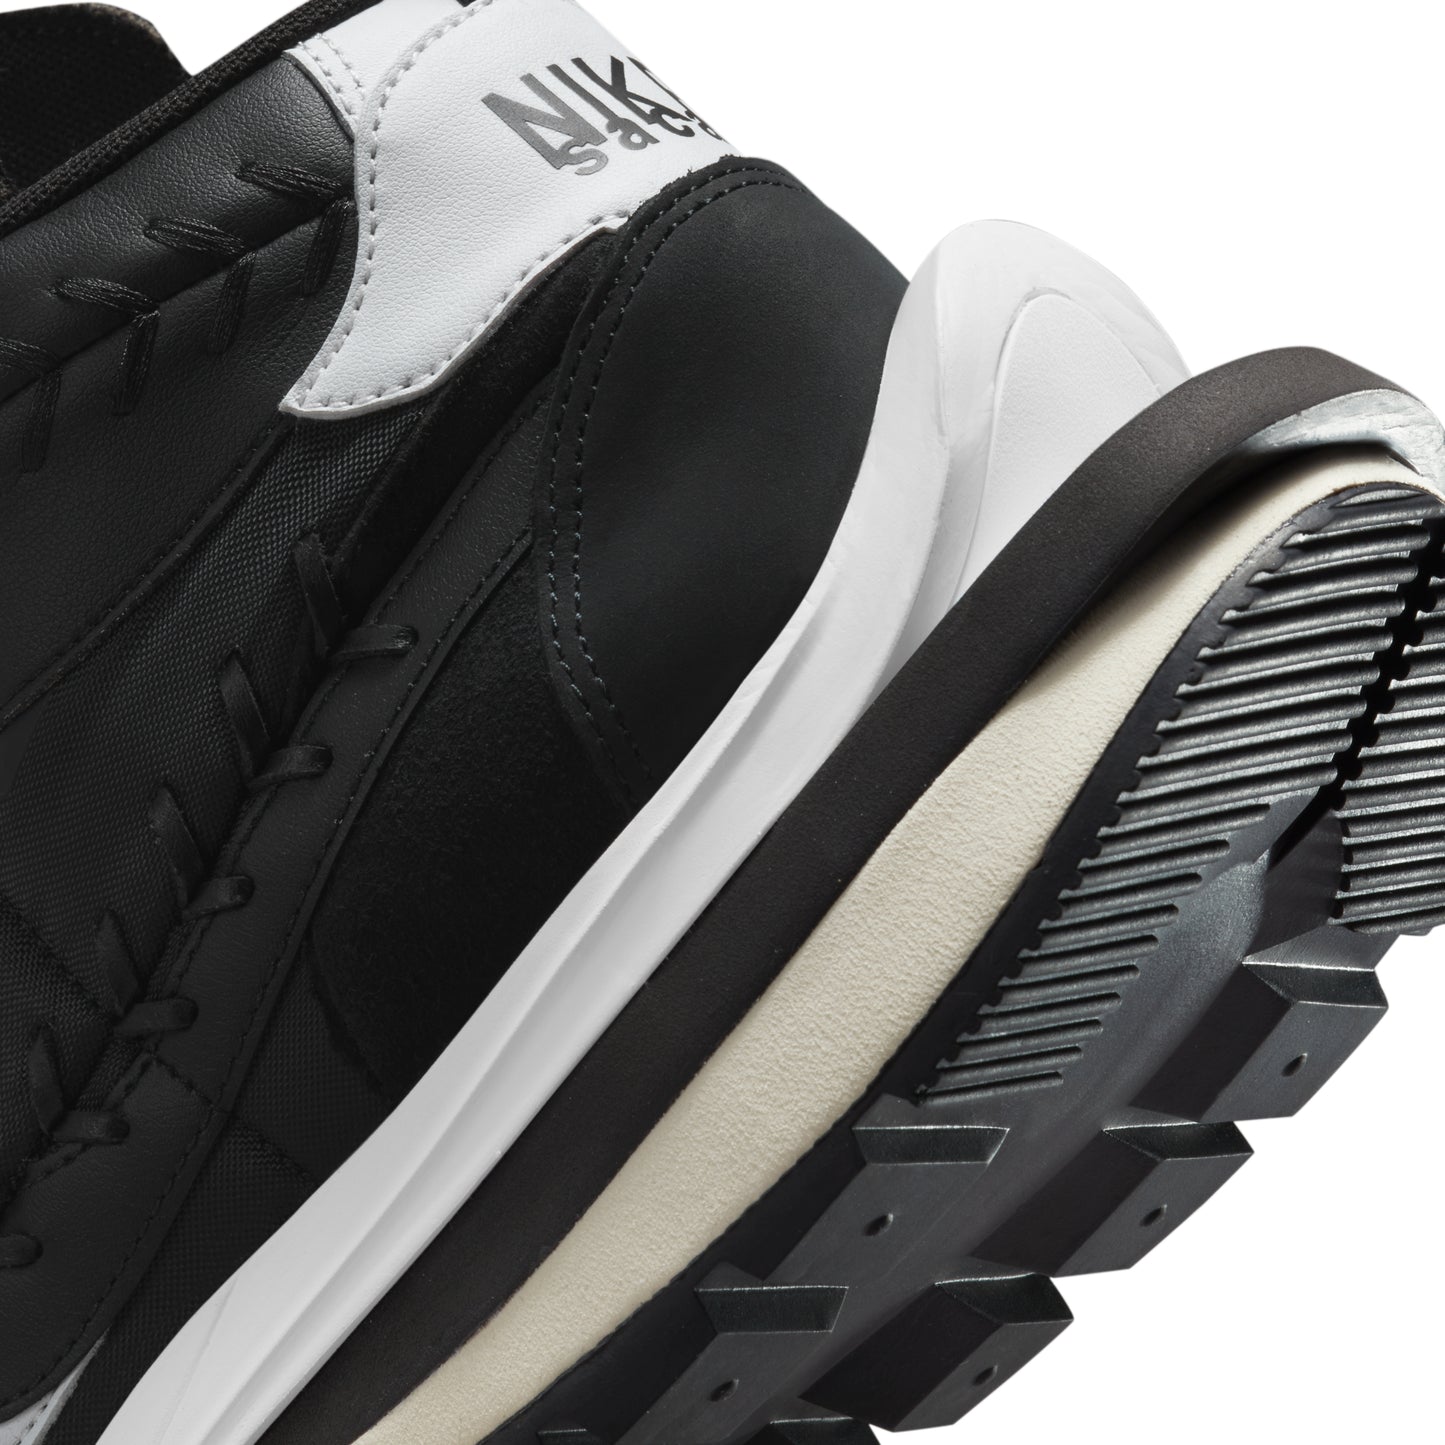 Nike x Sacai x Jean Paul Gaultier Vaporwaffle "Black White"